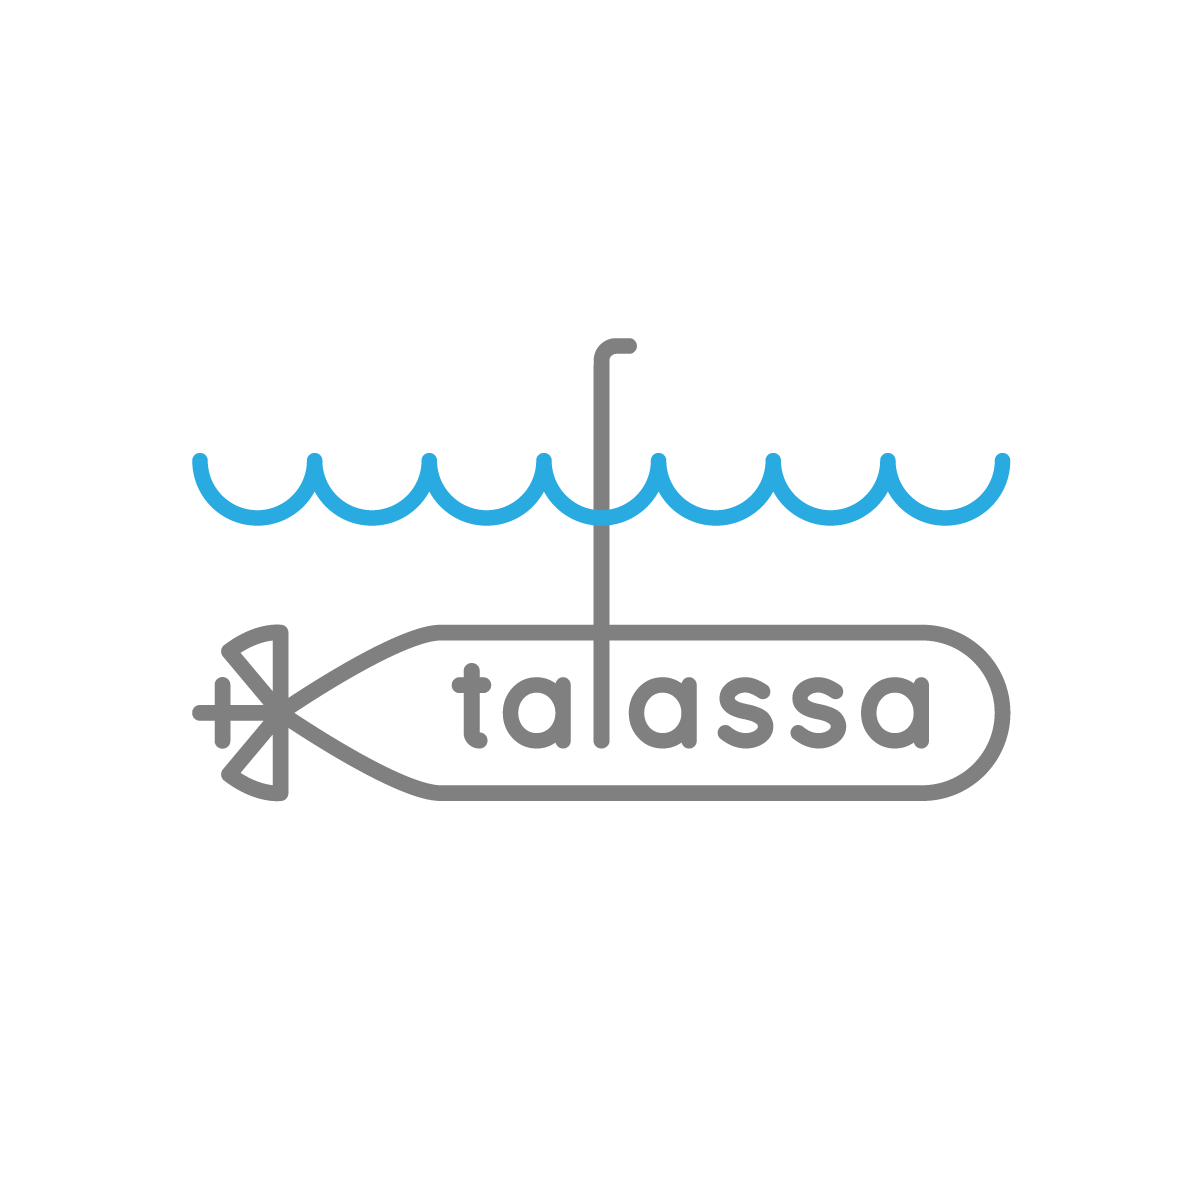 talassa_logo.png